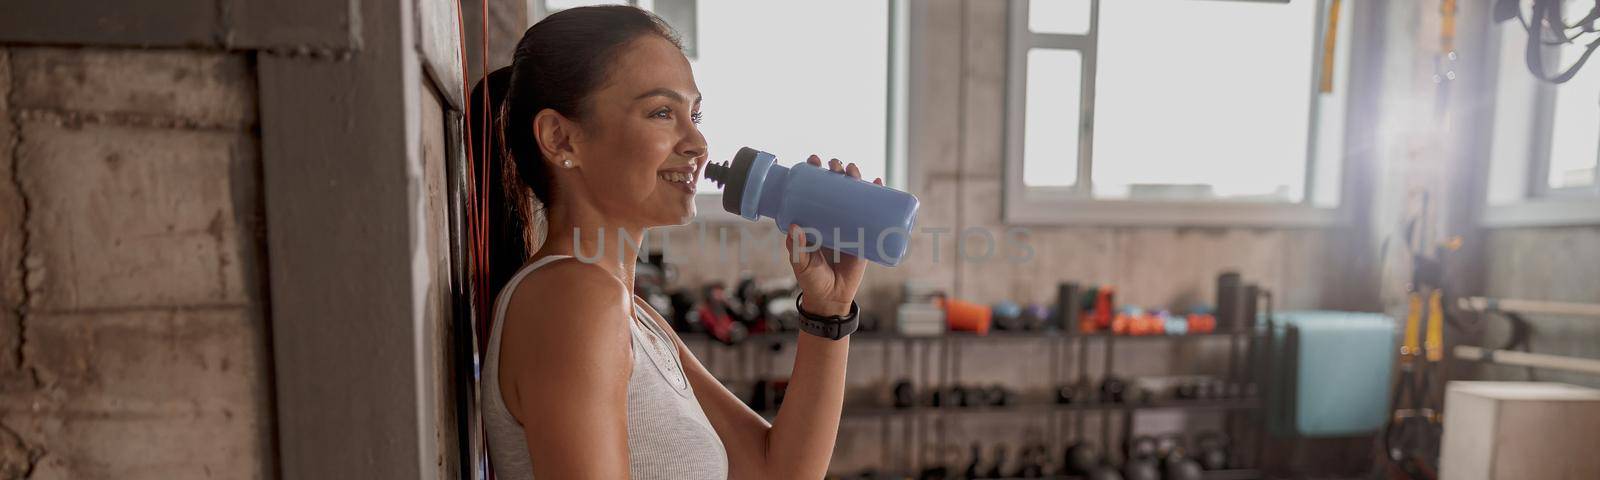 Slim woman in sportswear in the gym holding flask of water, smiling by Yaroslav_astakhov